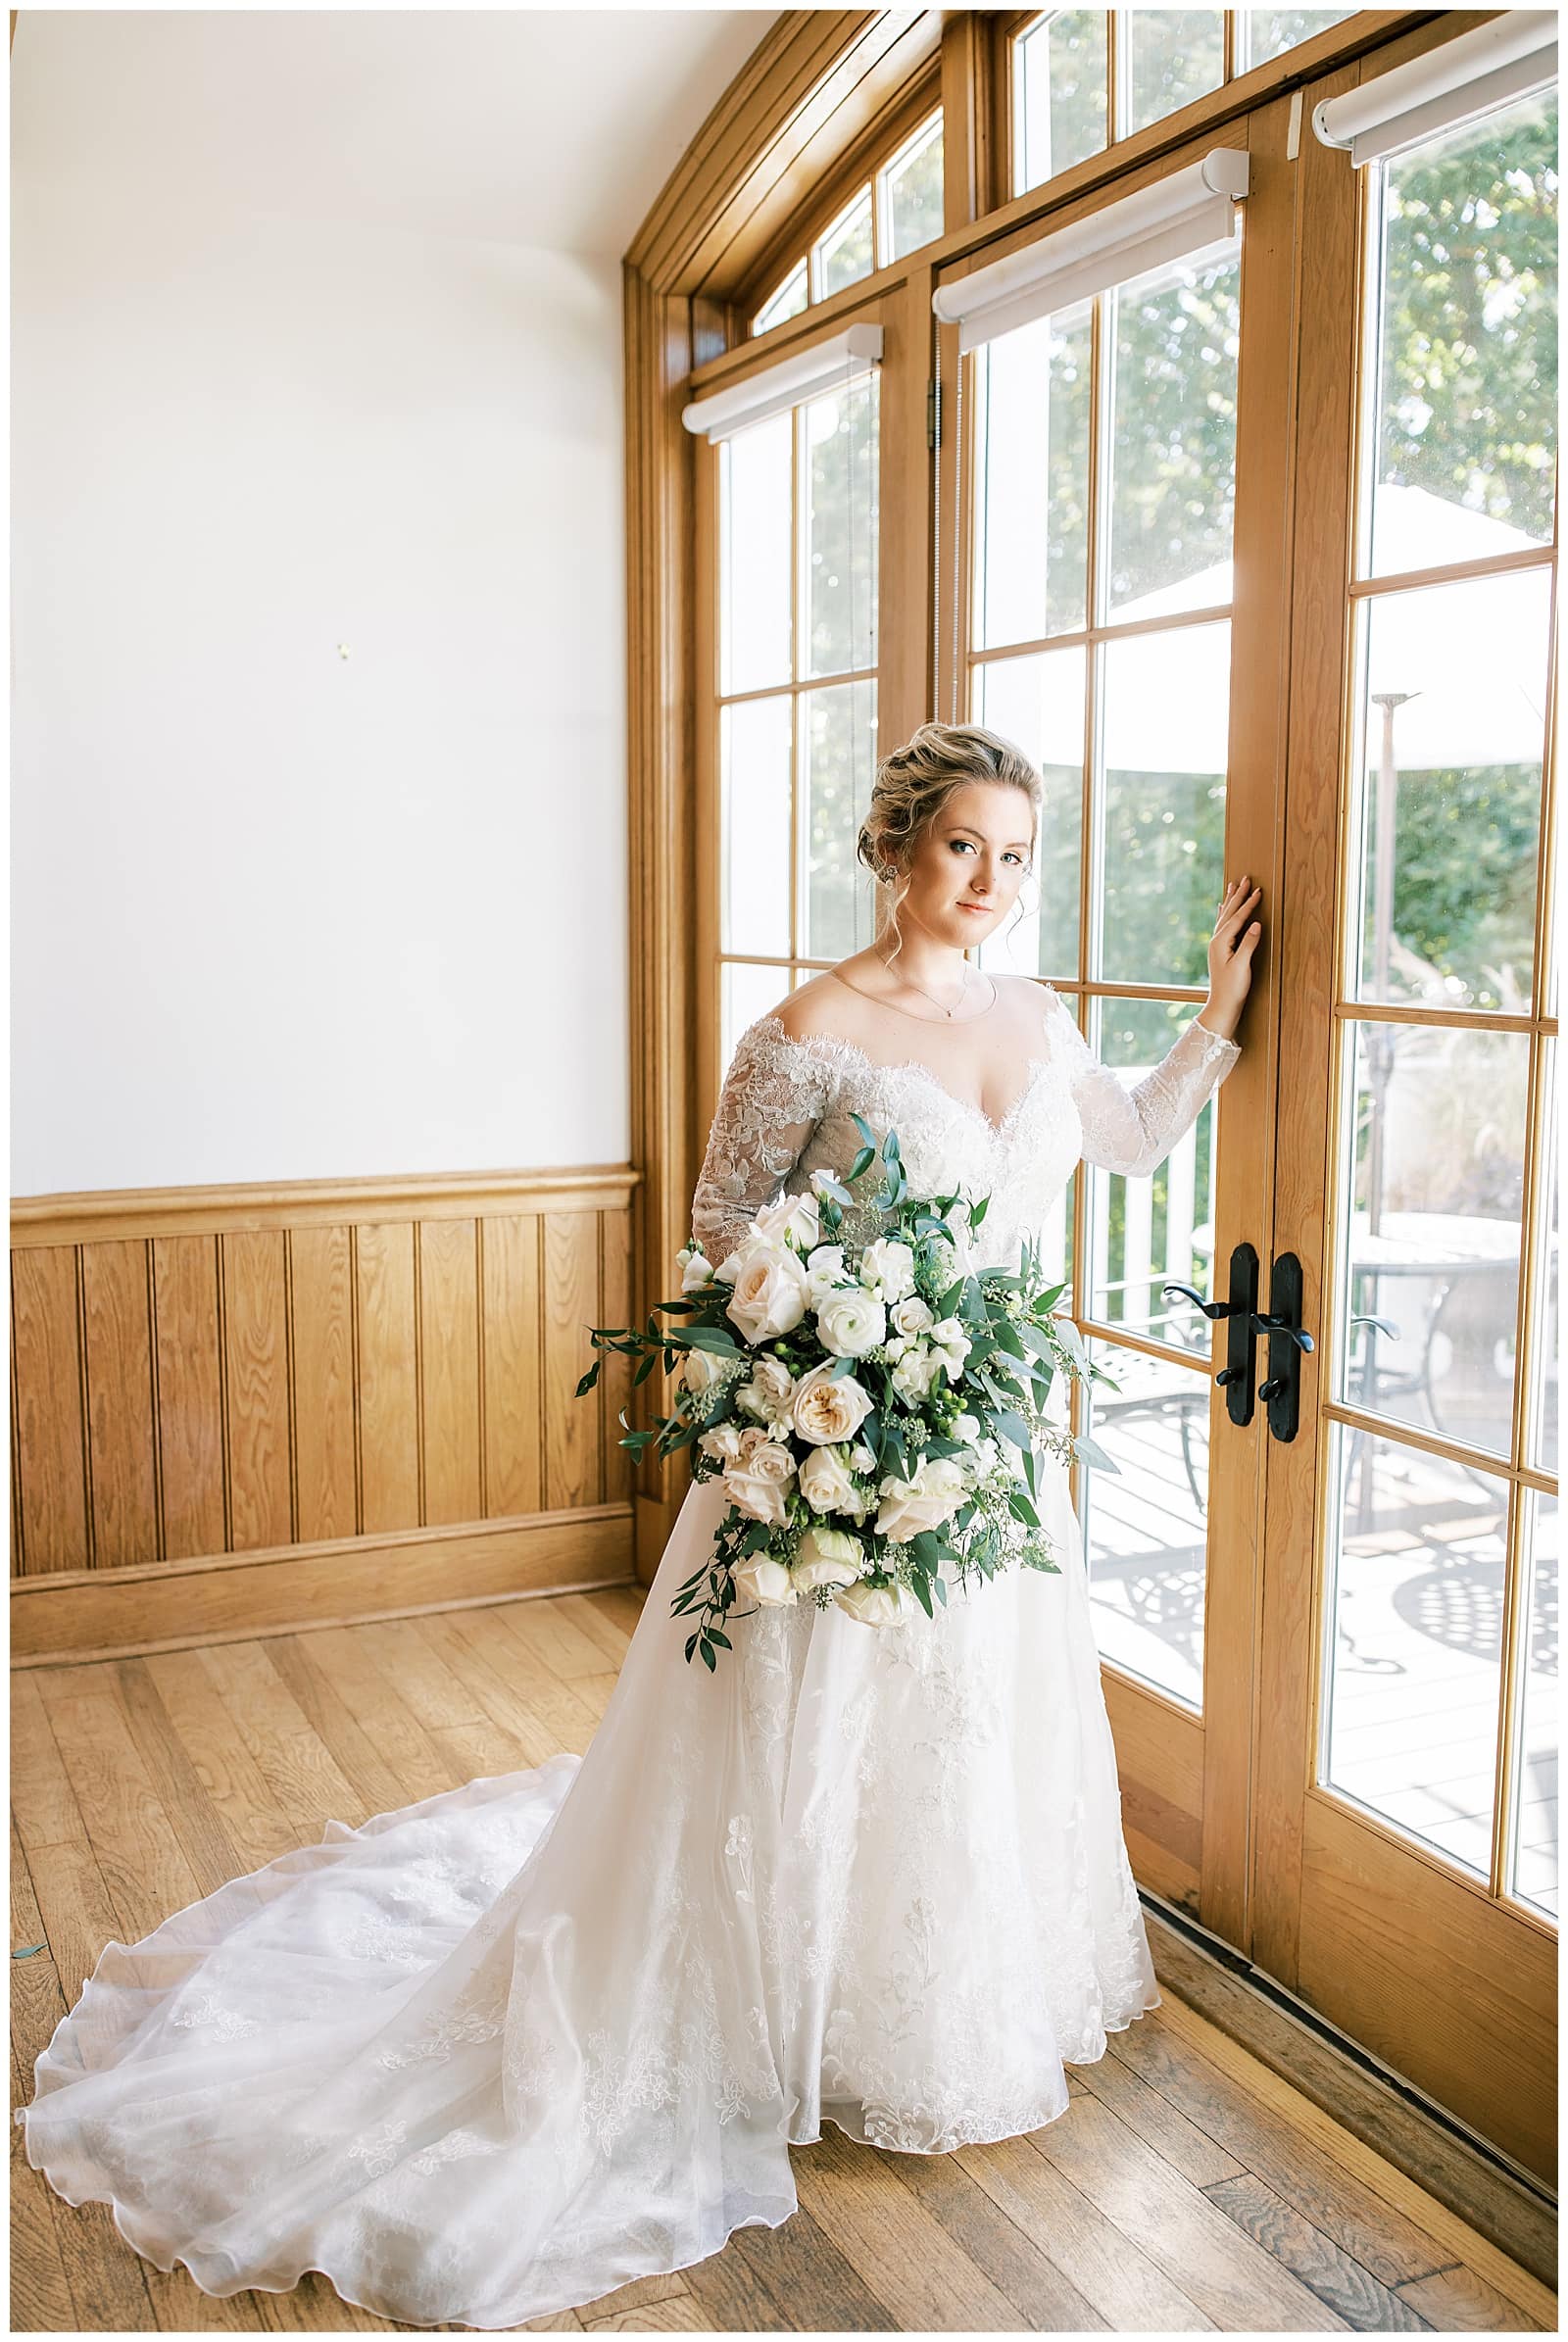 Danielle-Defayette-Photography-Castle-Hill-Cider-Wedding-Charlottesville-2020_0011.jpg